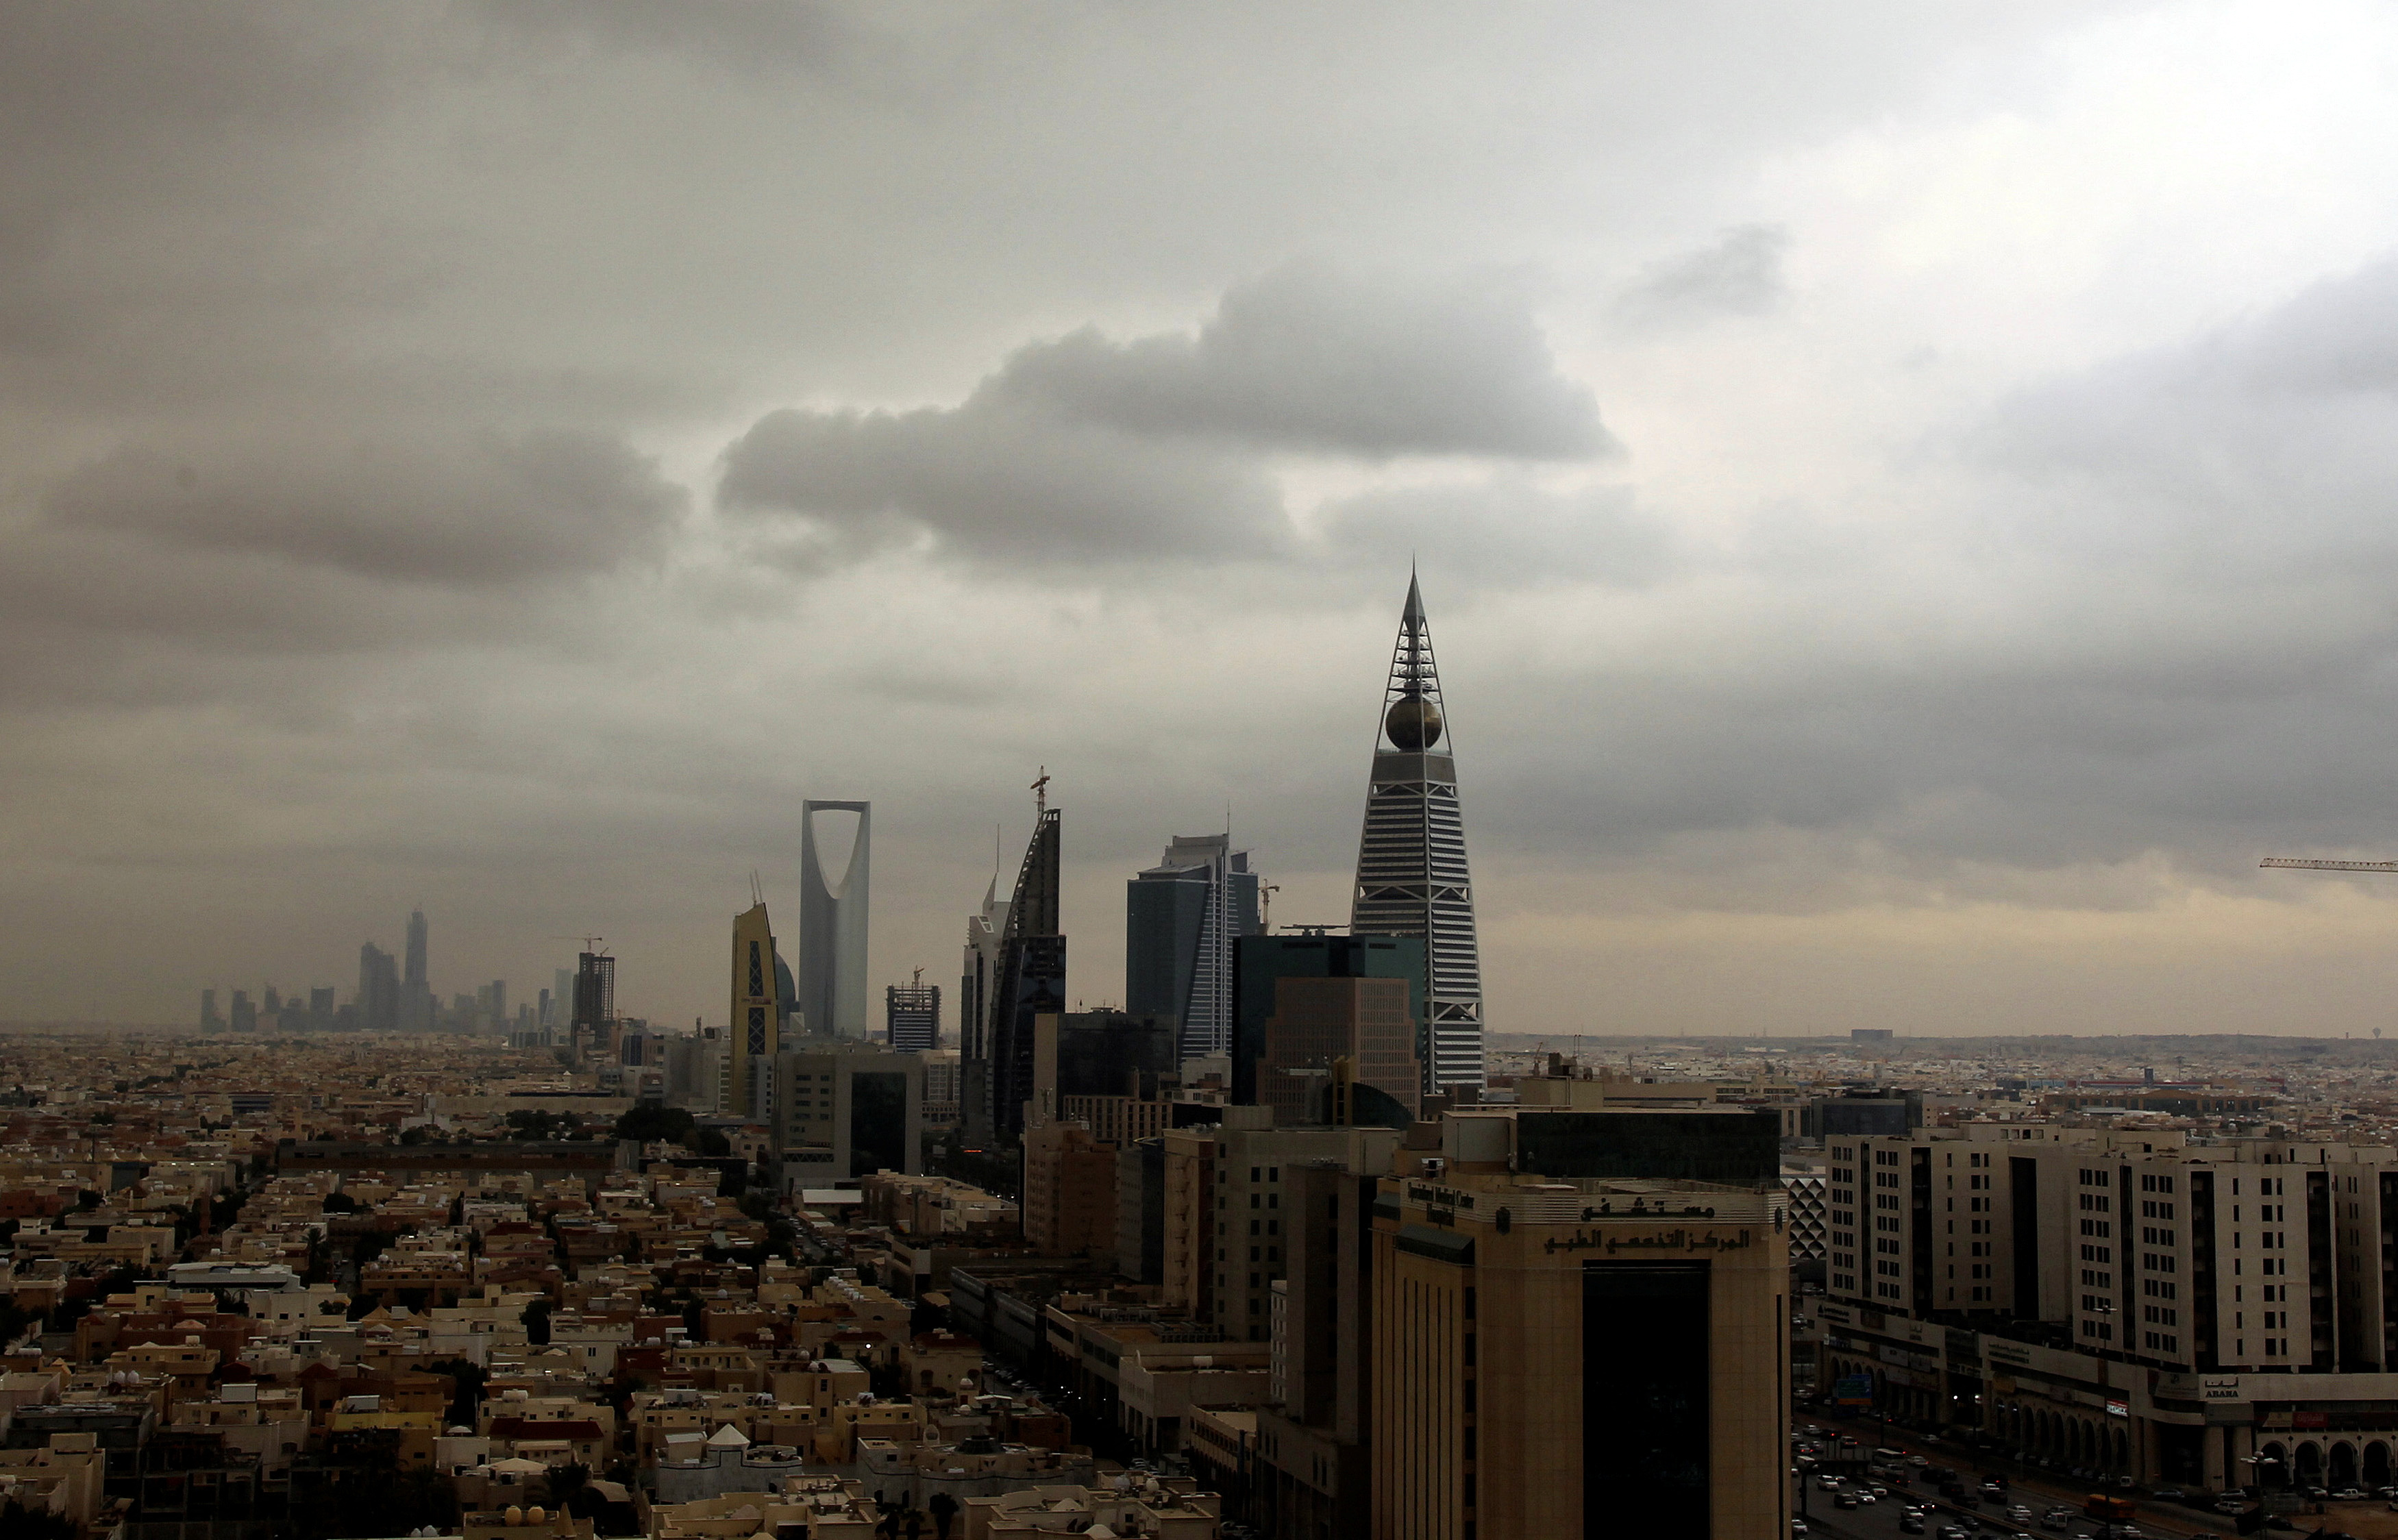 Clouds move over the Riyadh skyline